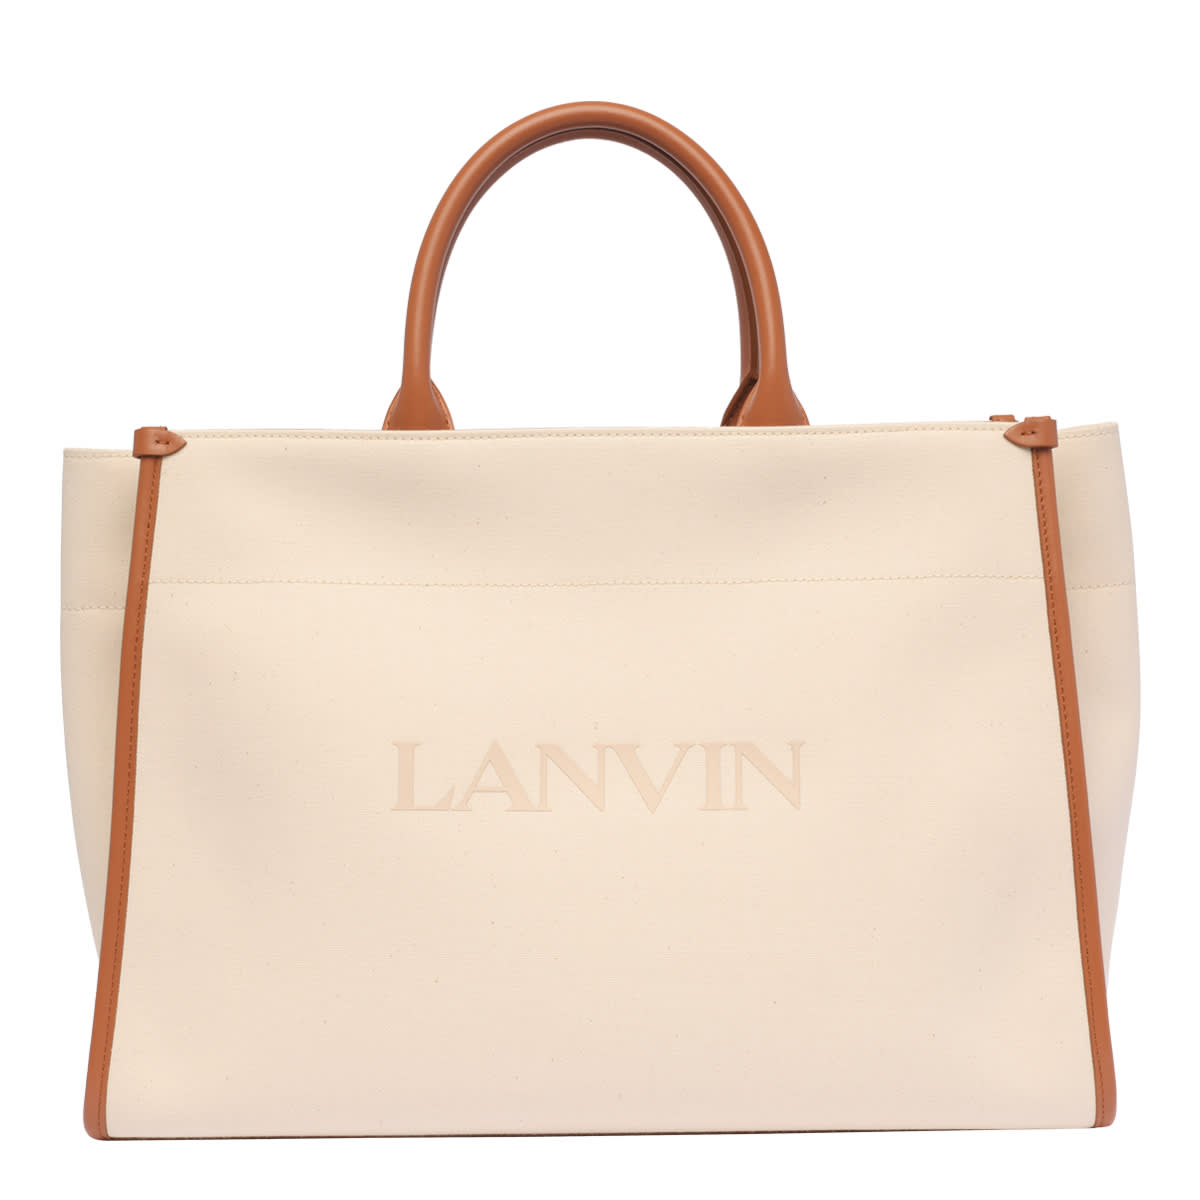 Lanvin Mm Logo Tote Bag